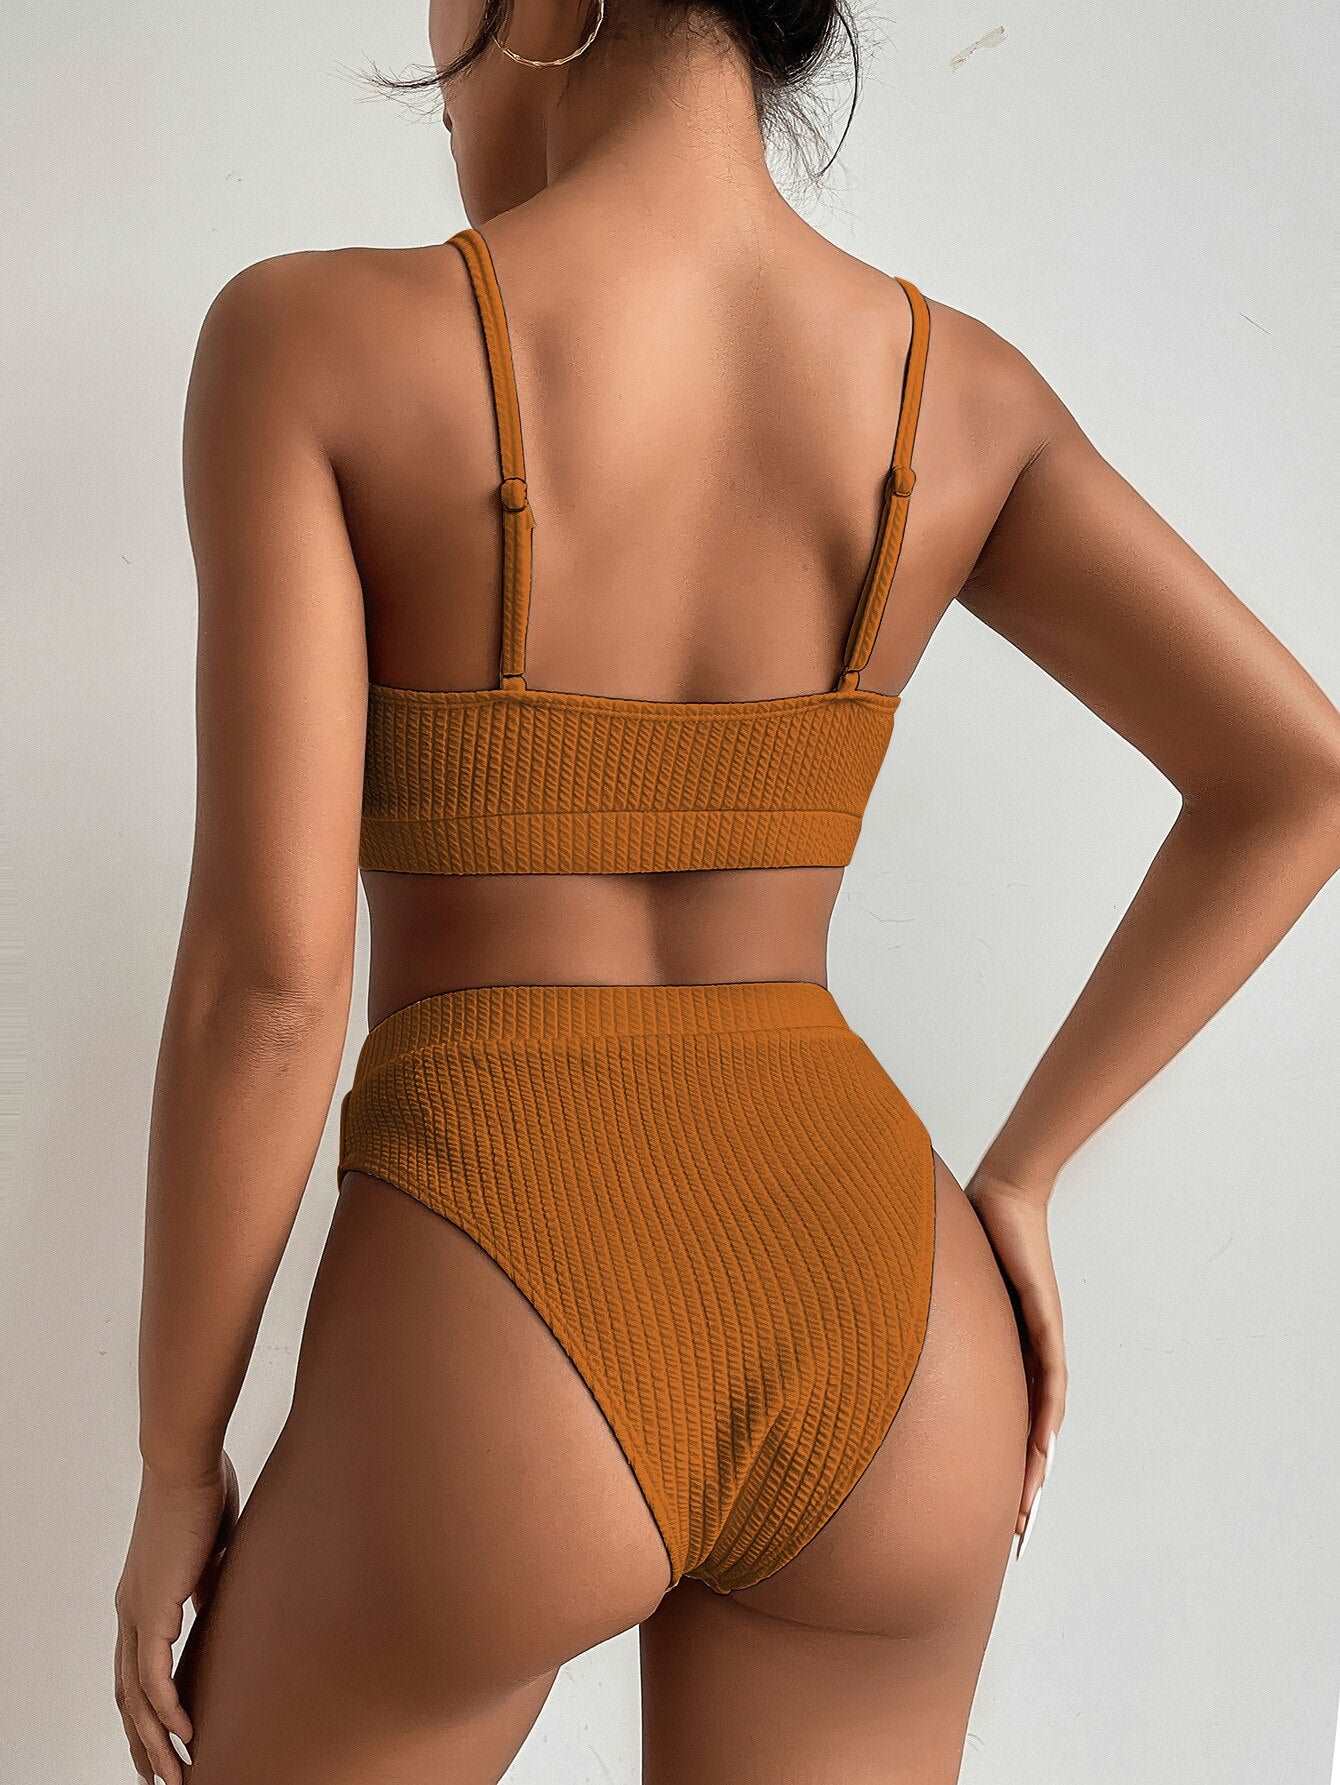 ROSVIGOR Ribbed Two Piece Bikini Swimsuit: High-Waisted Tummy Control Swimwear Set for Women